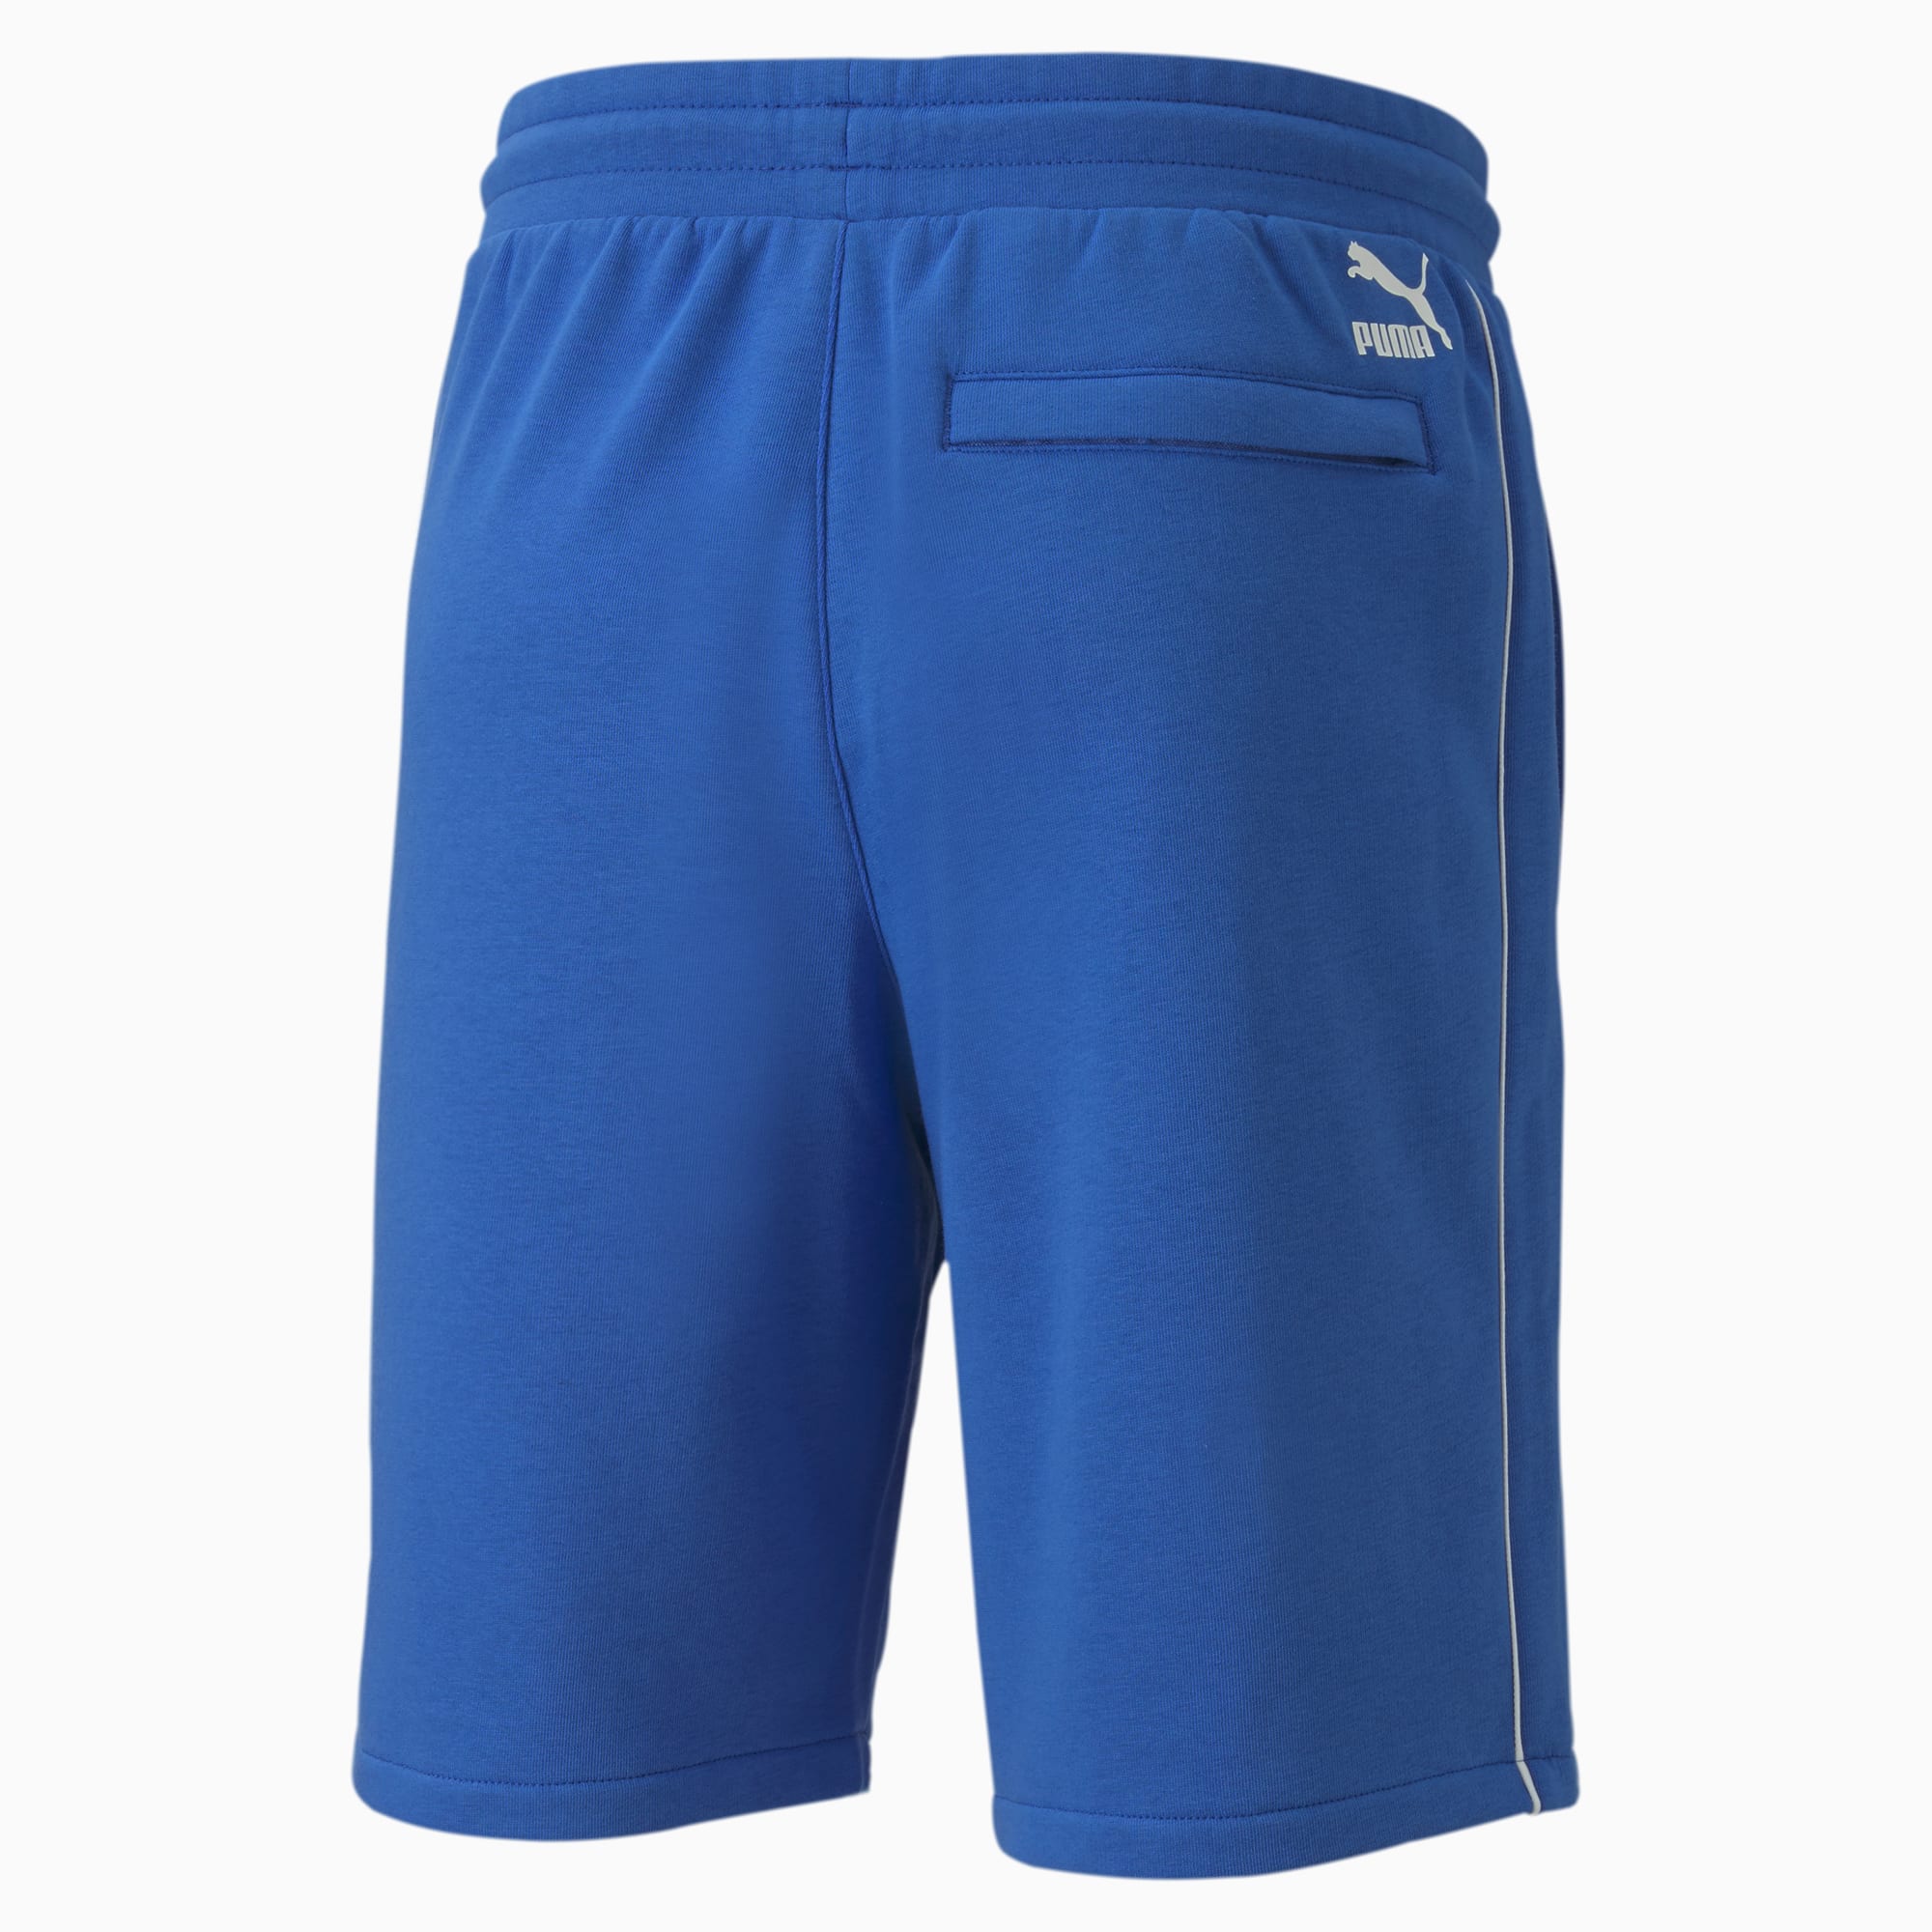 puma sport lifestyle shorts